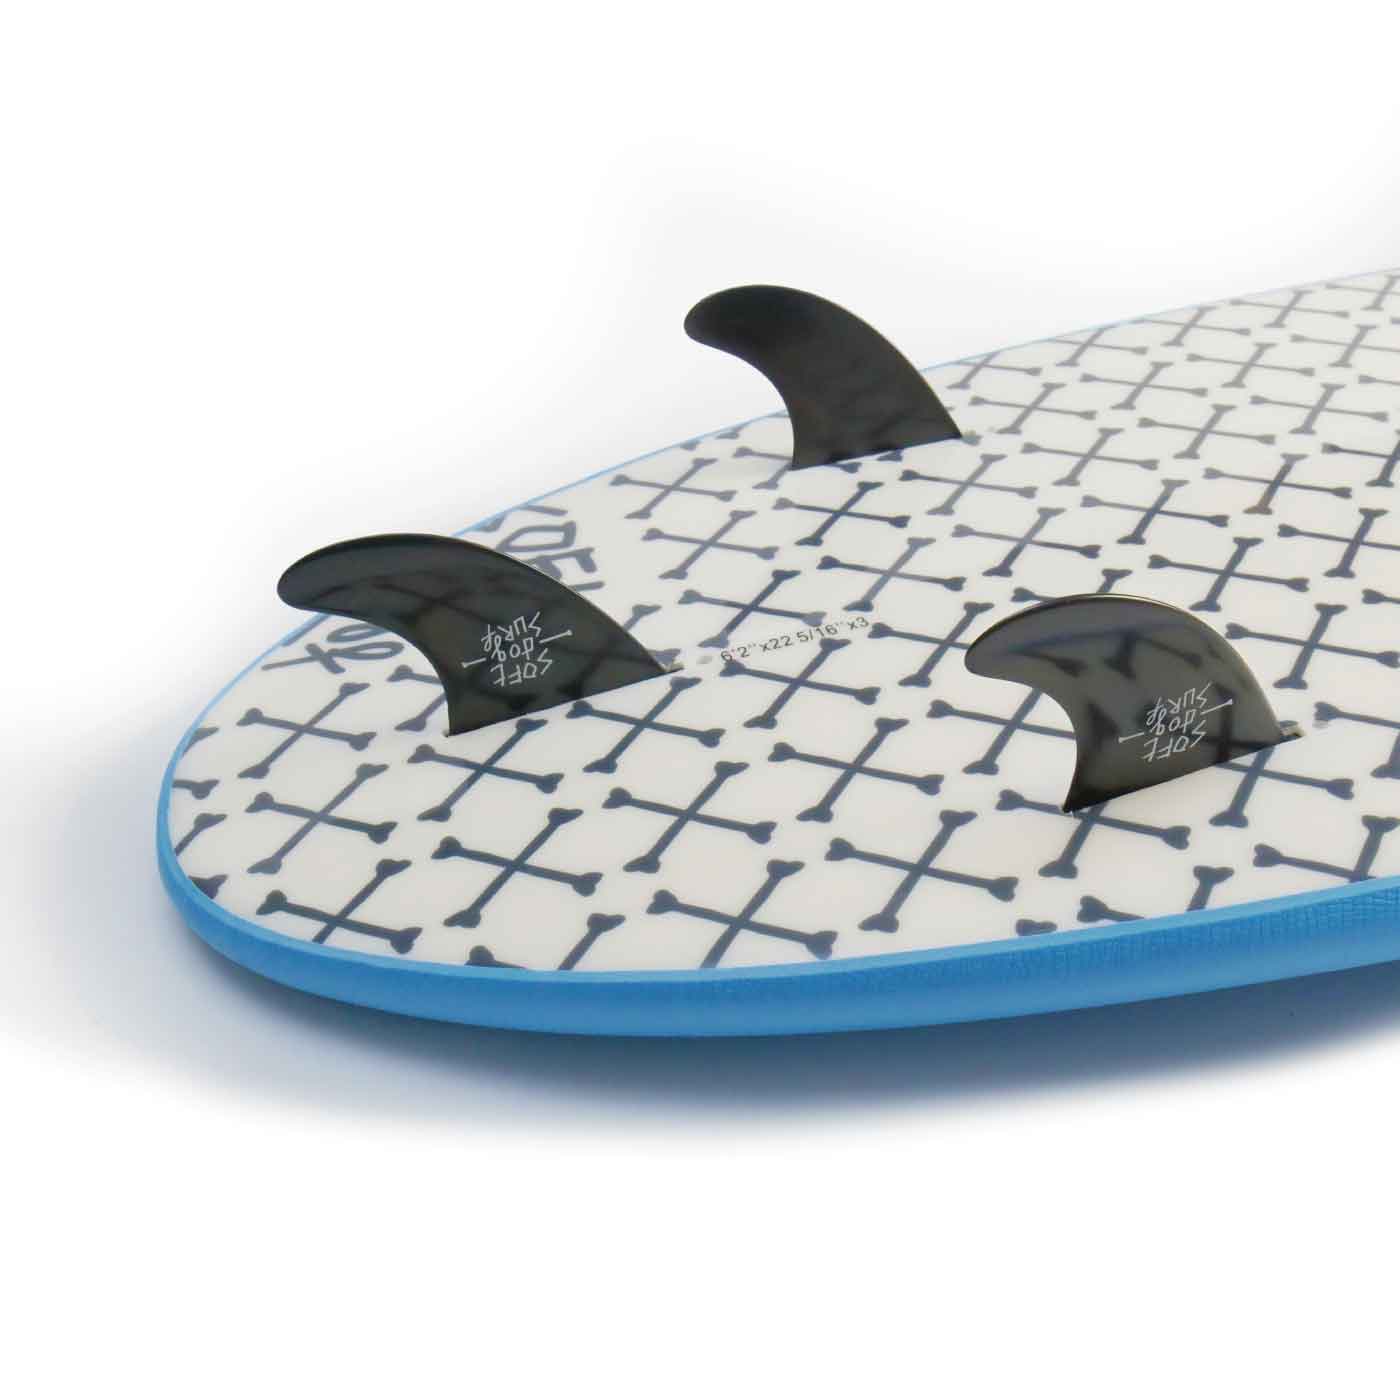 softdogsurf grate dane 6'2 soft top surf board futures thruster fins